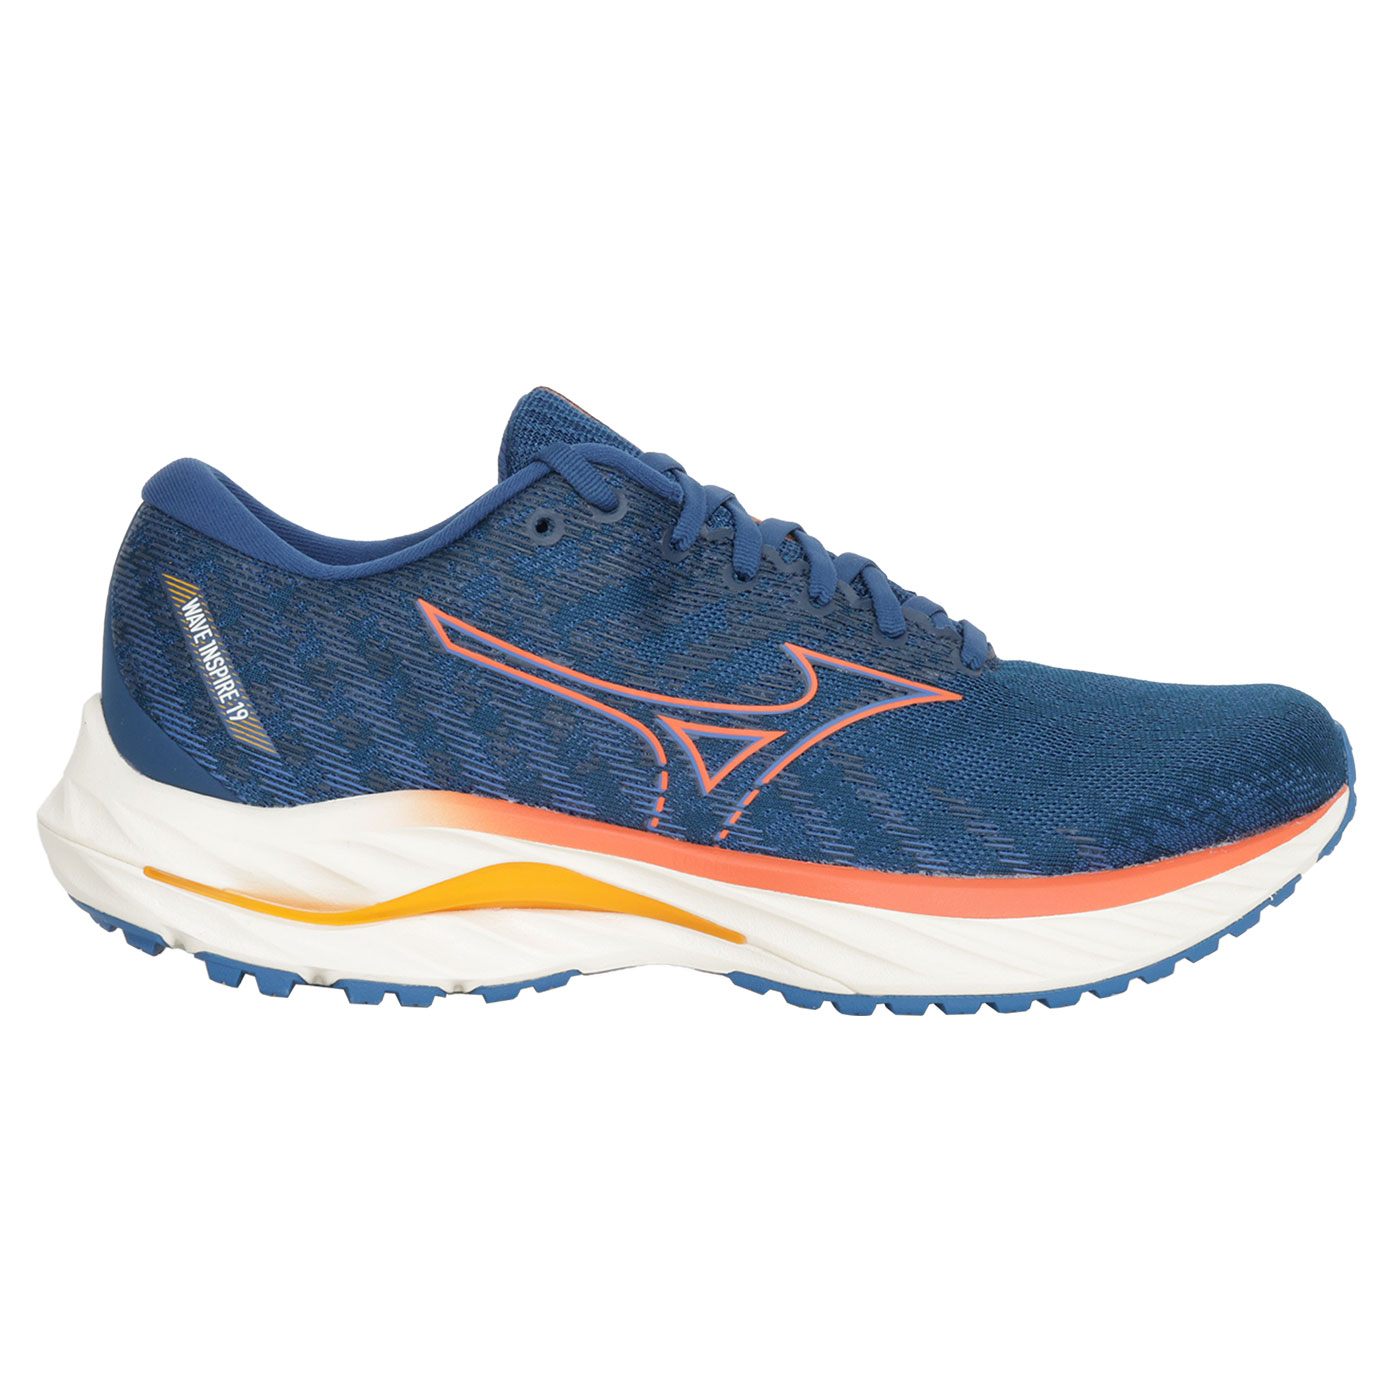 MIZUNO 男款慢跑鞋  @WAVE INSPIRE 19 @ J1GC234455 - 墨藍橘